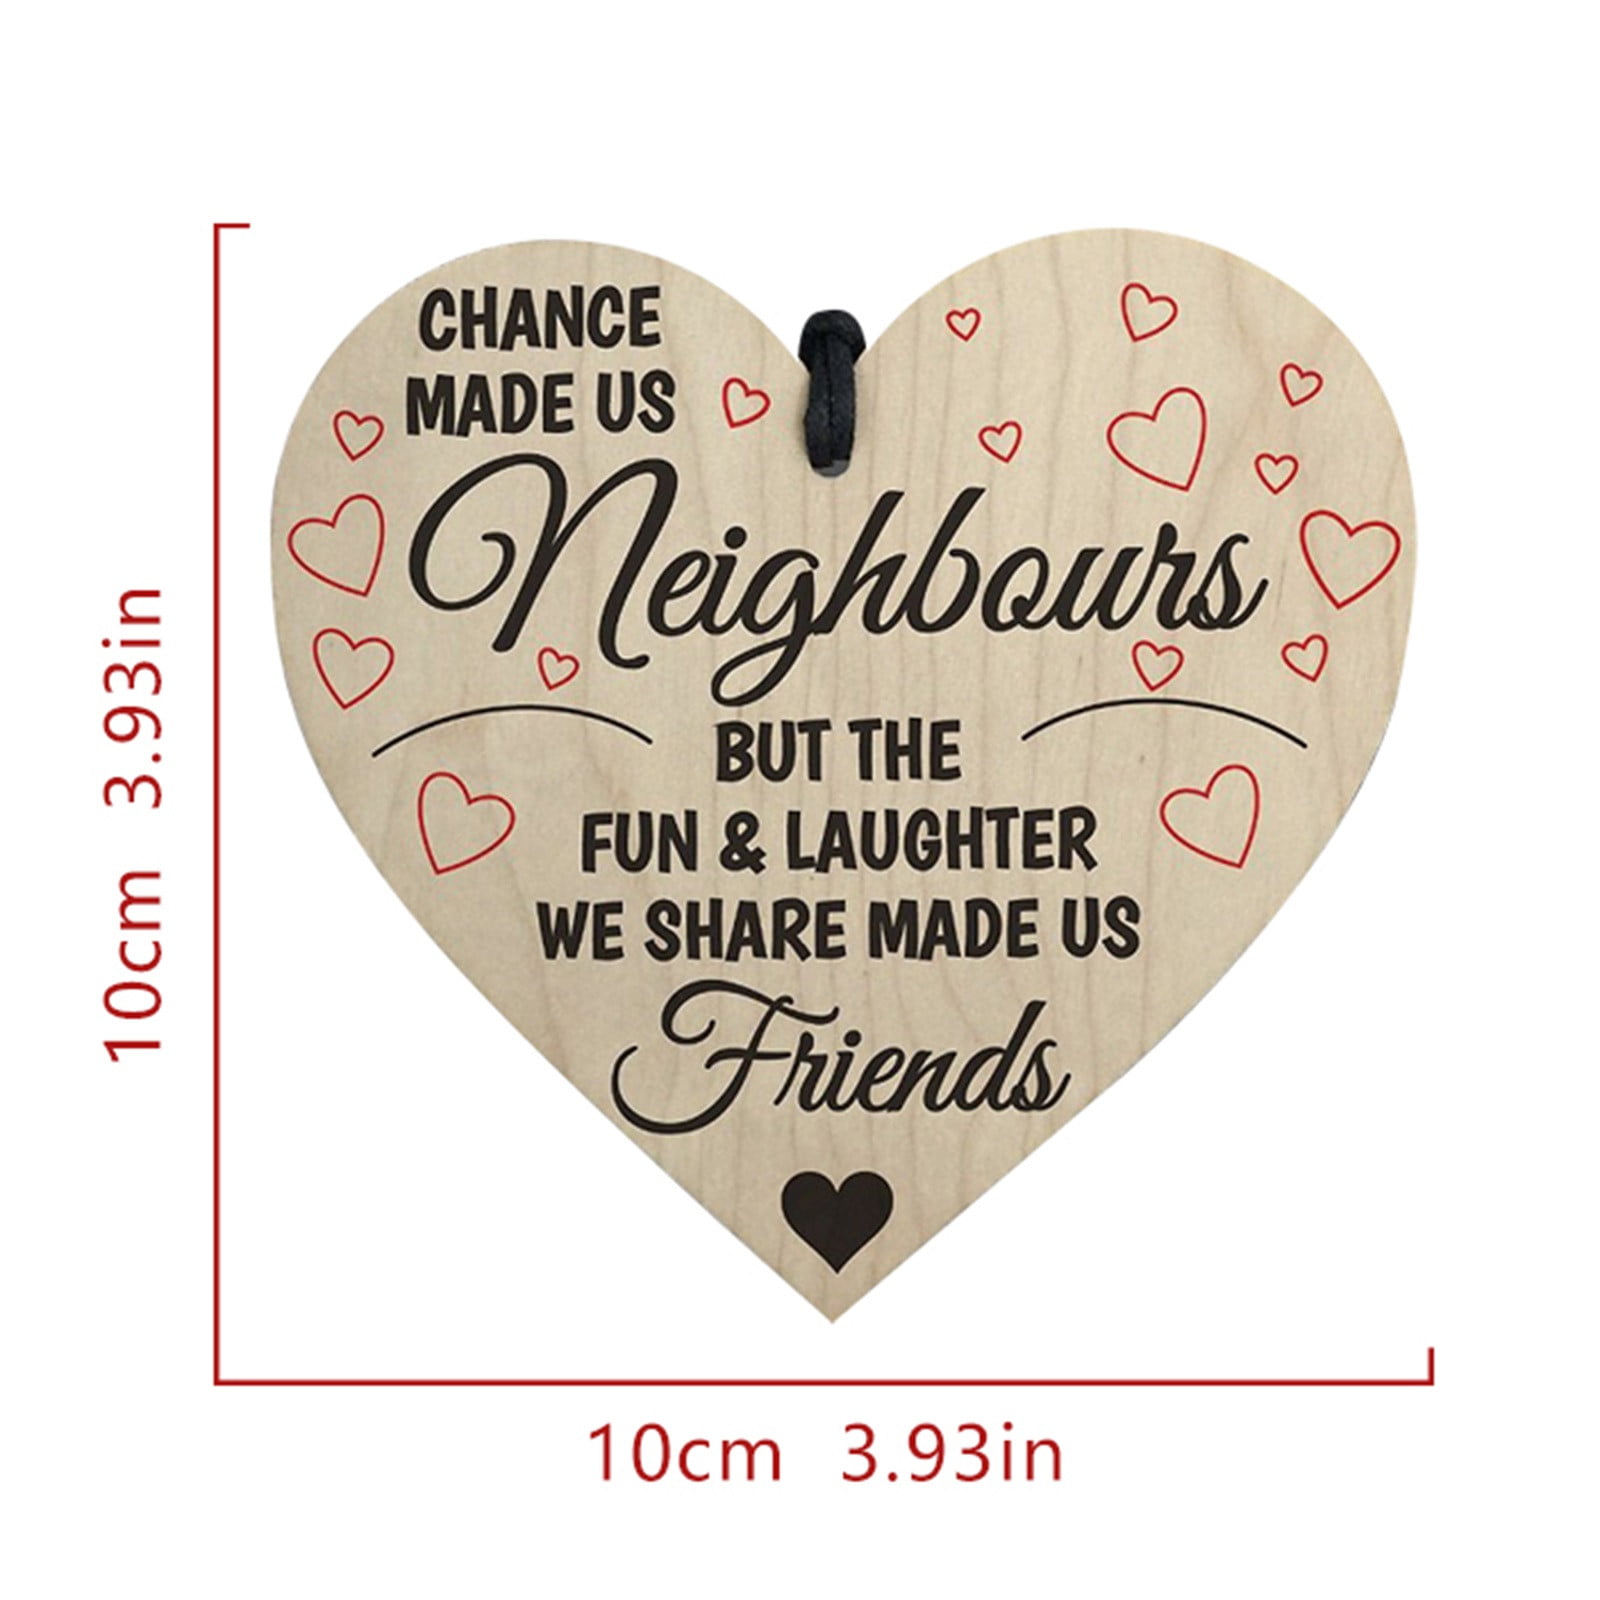 neighbours heart shaped wooden plaque 